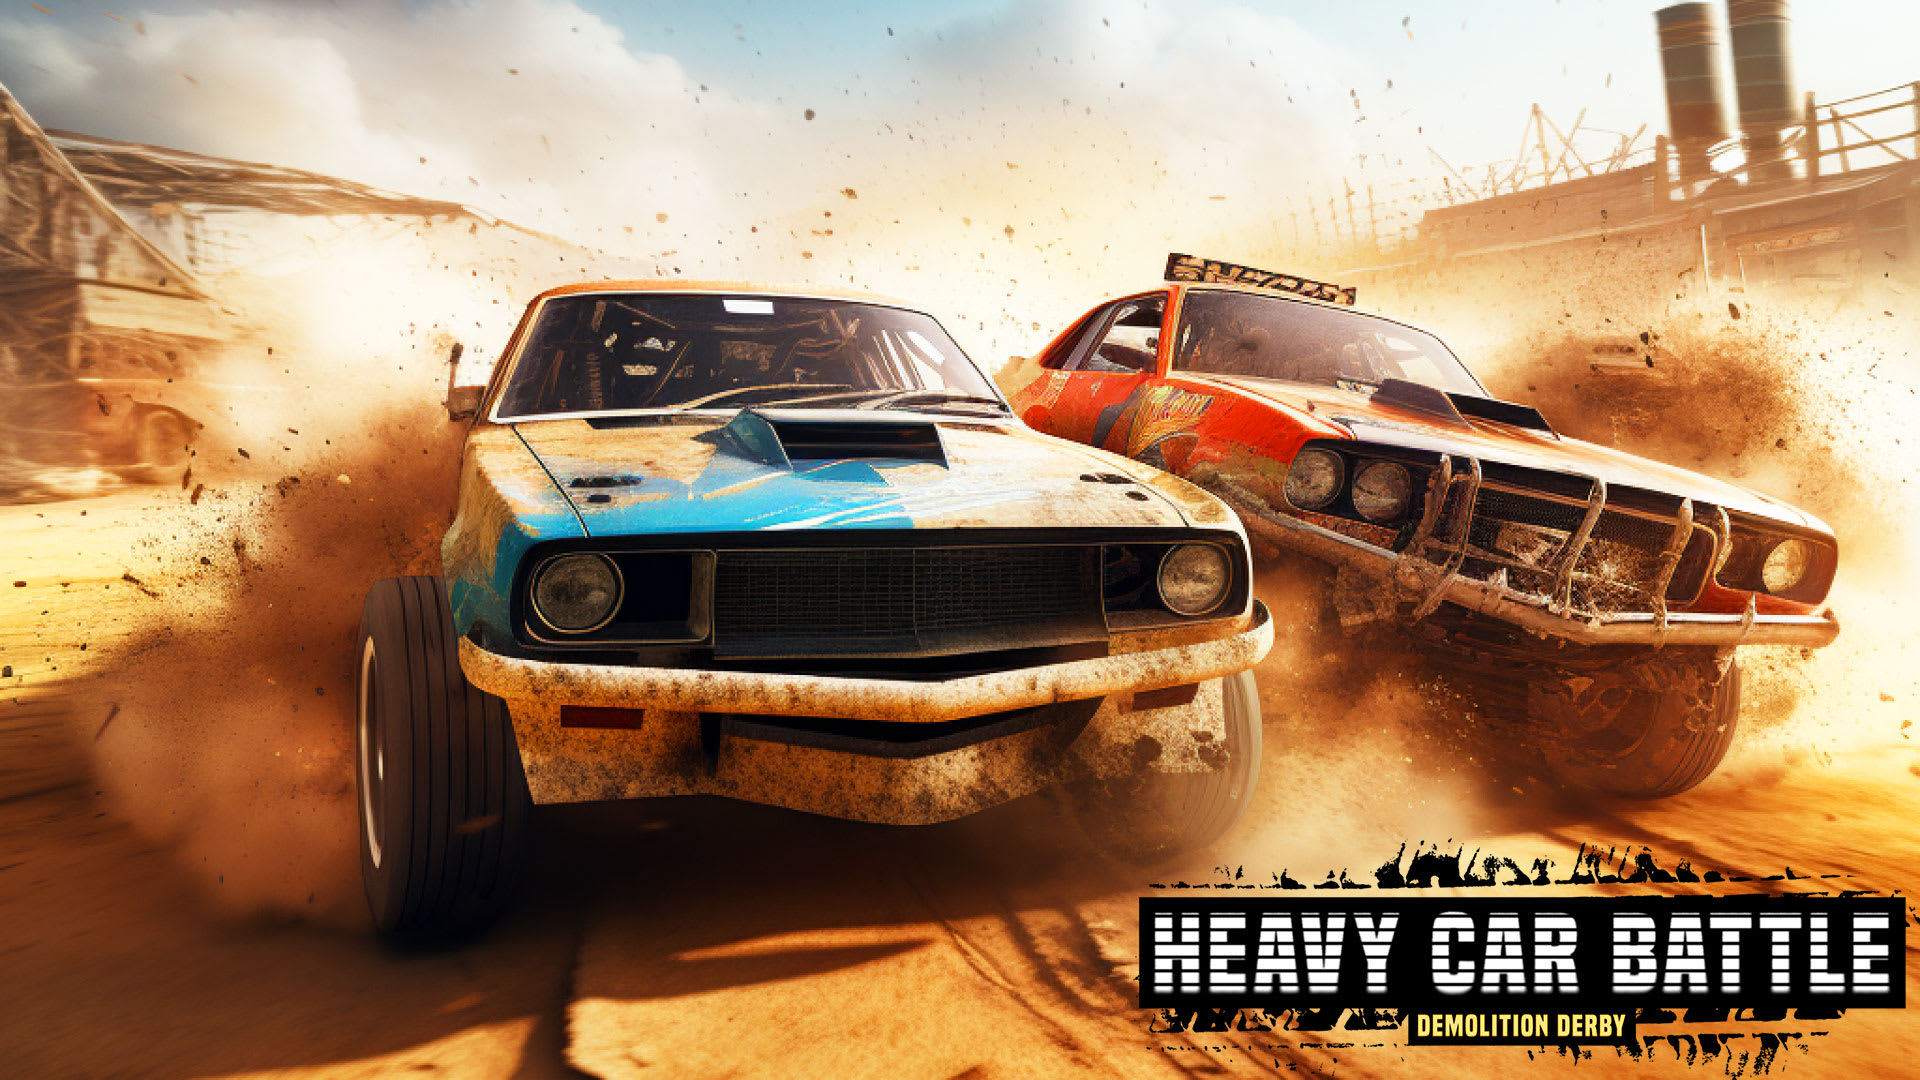 Heavy Car Battle - Demolition Derby